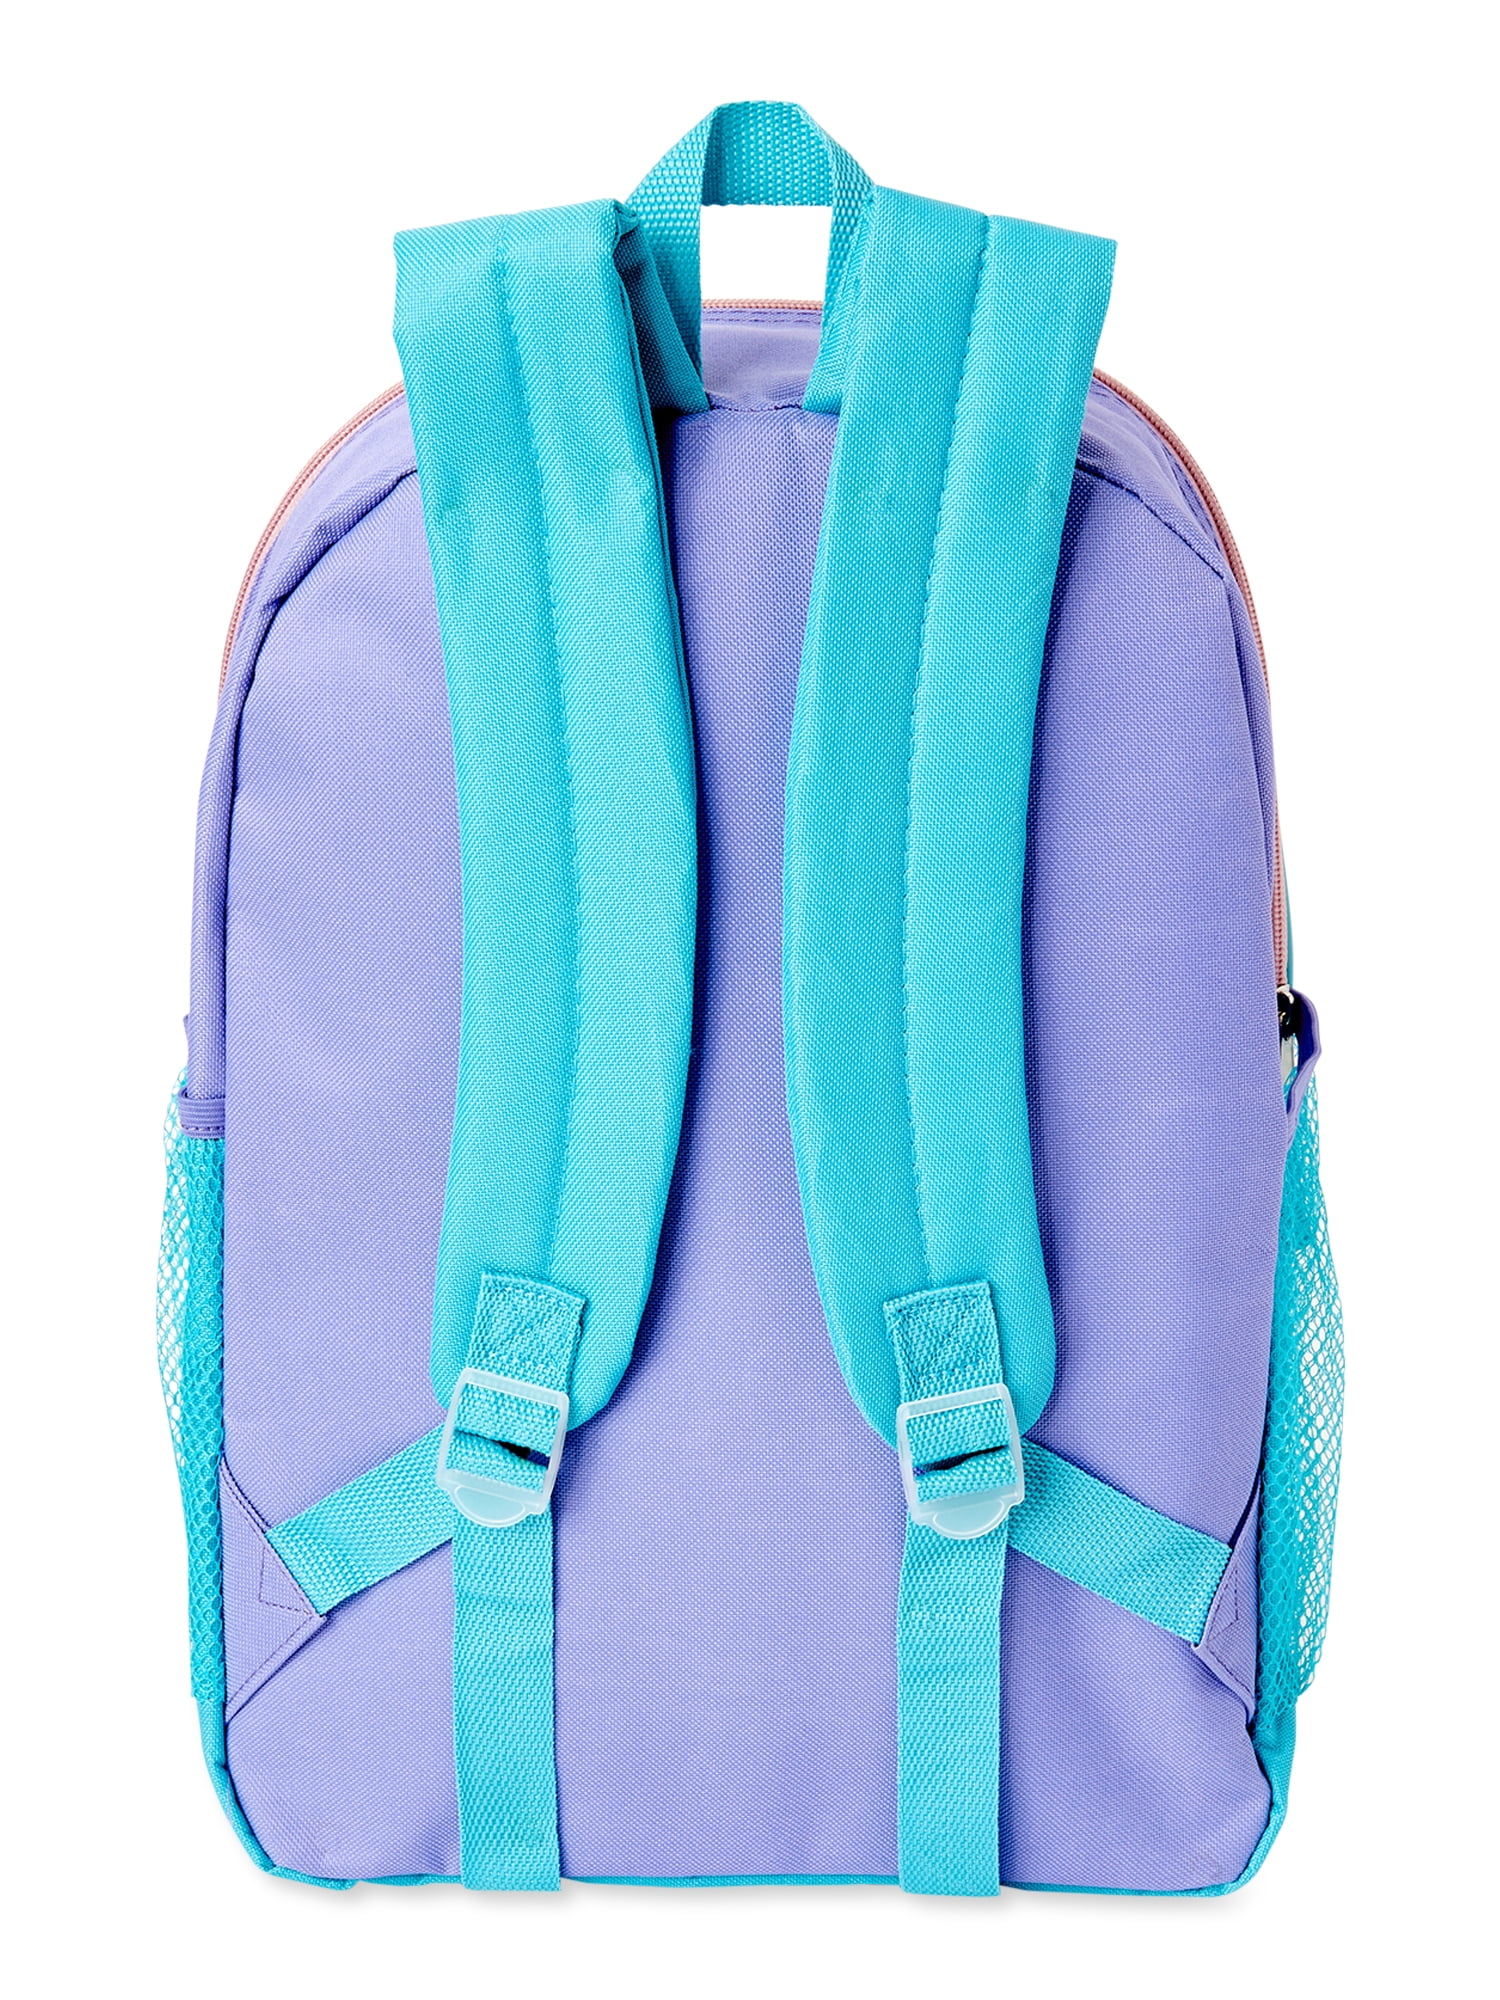 New Disney Frozen Elsa Anna Purple School Lunch Box Bag Toys Carry Case NWT